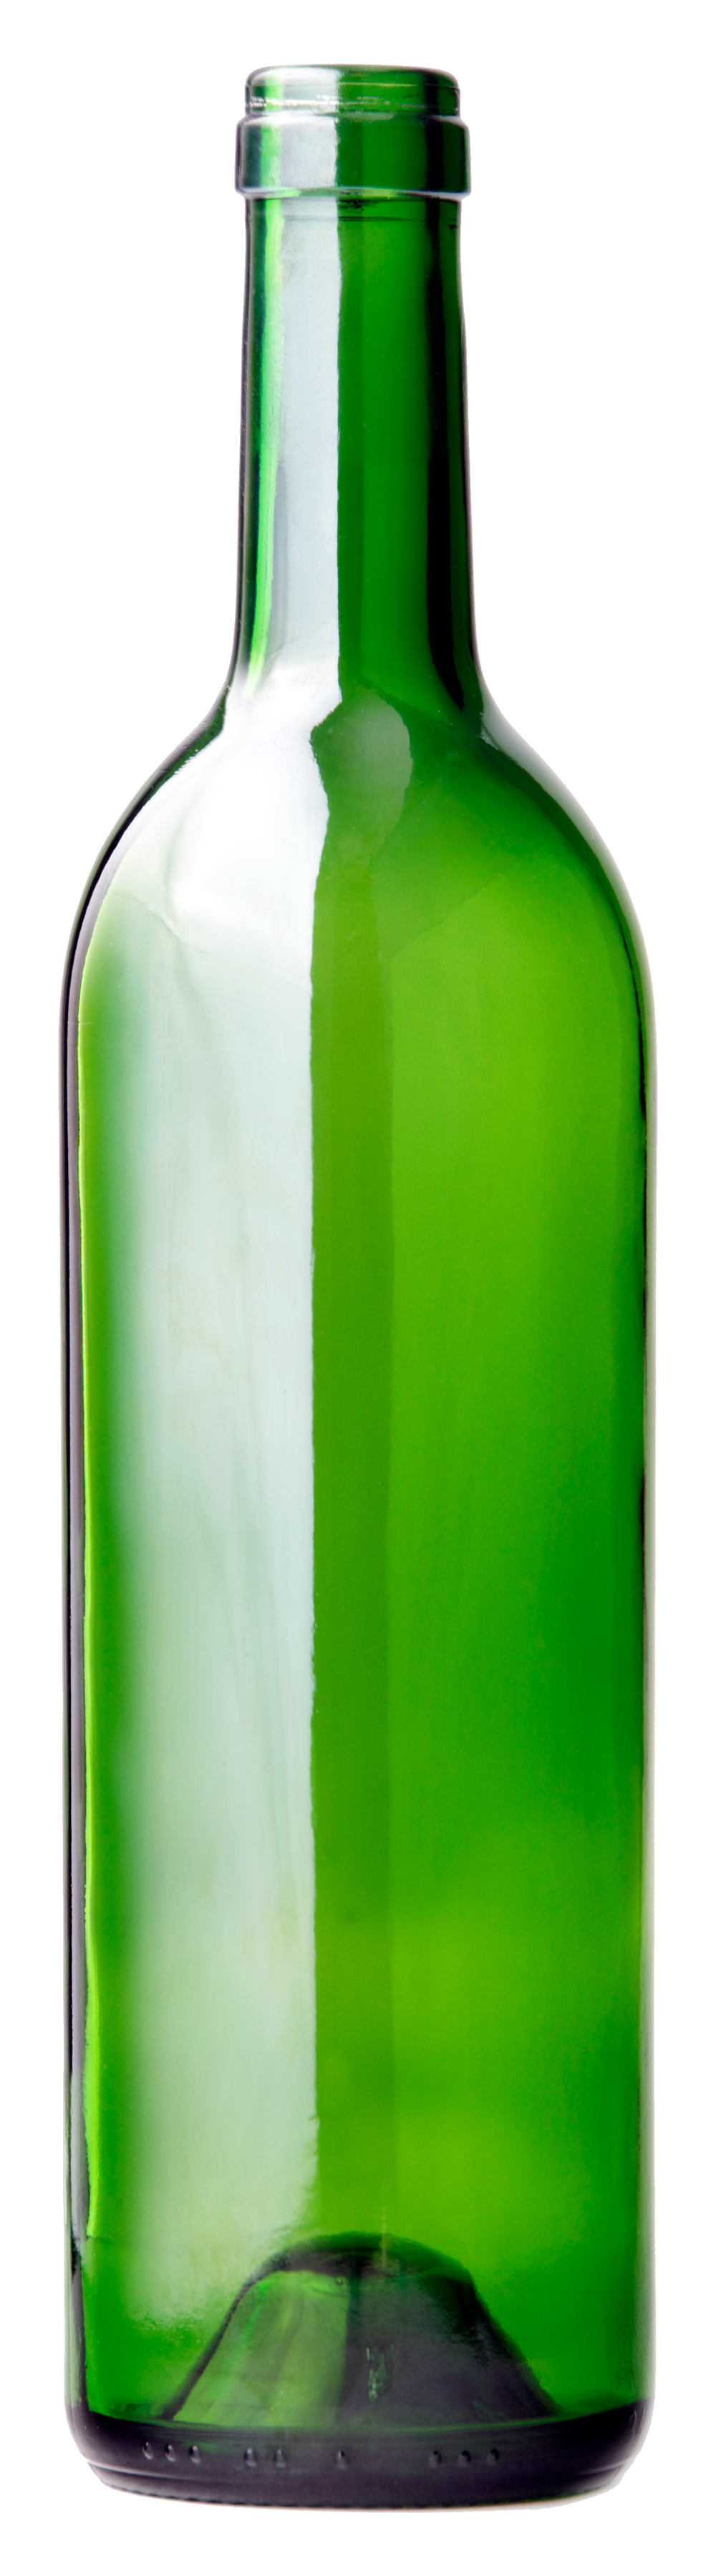 Glass Green Bottle Png Image - Bottle, Transparent background PNG HD thumbnail